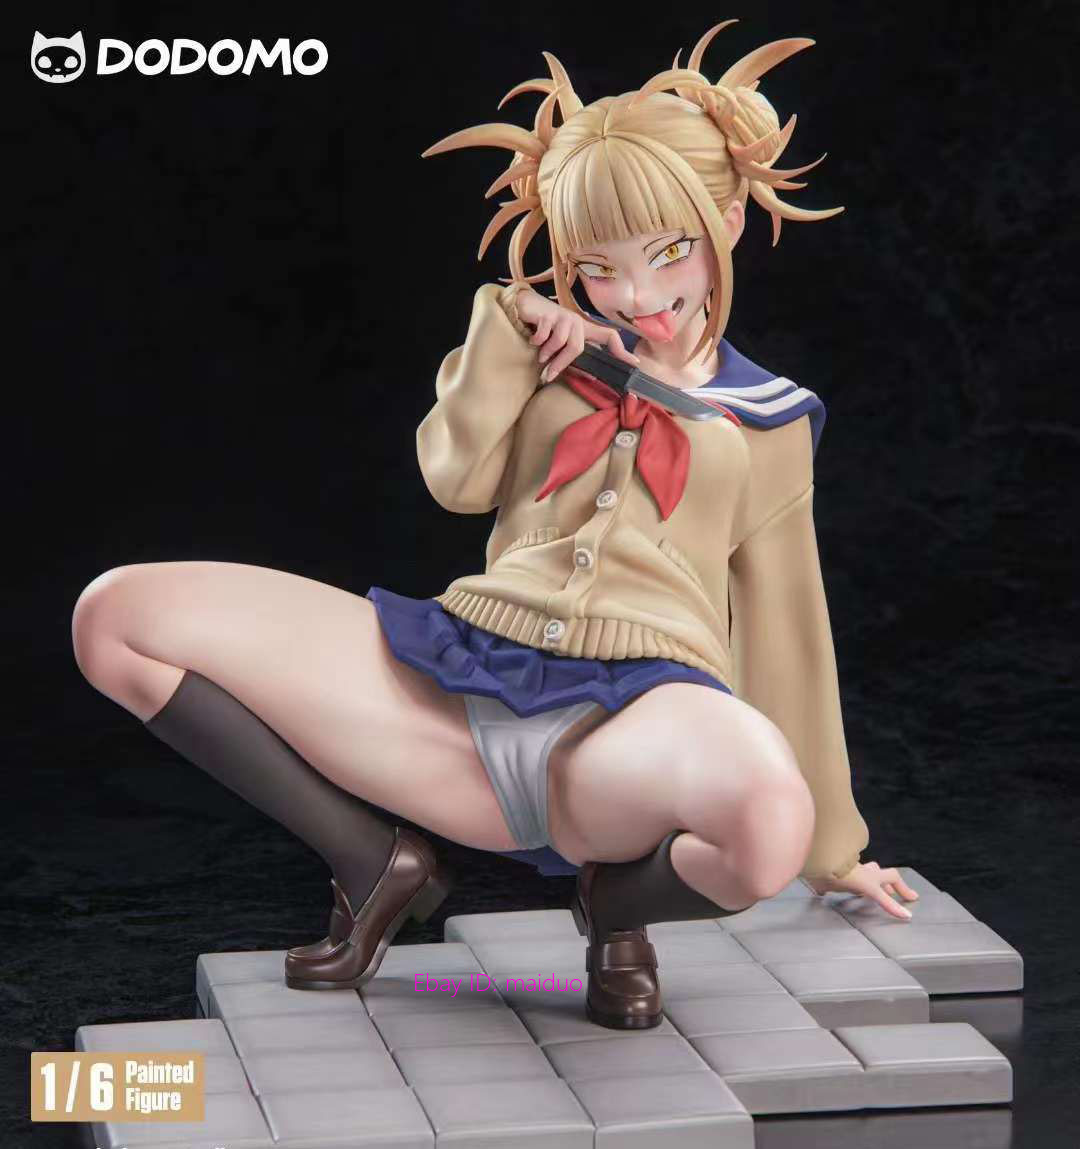 Cross my body Himiko Toga Dodomo Studio Resin Figurine EX version 17cm Presale